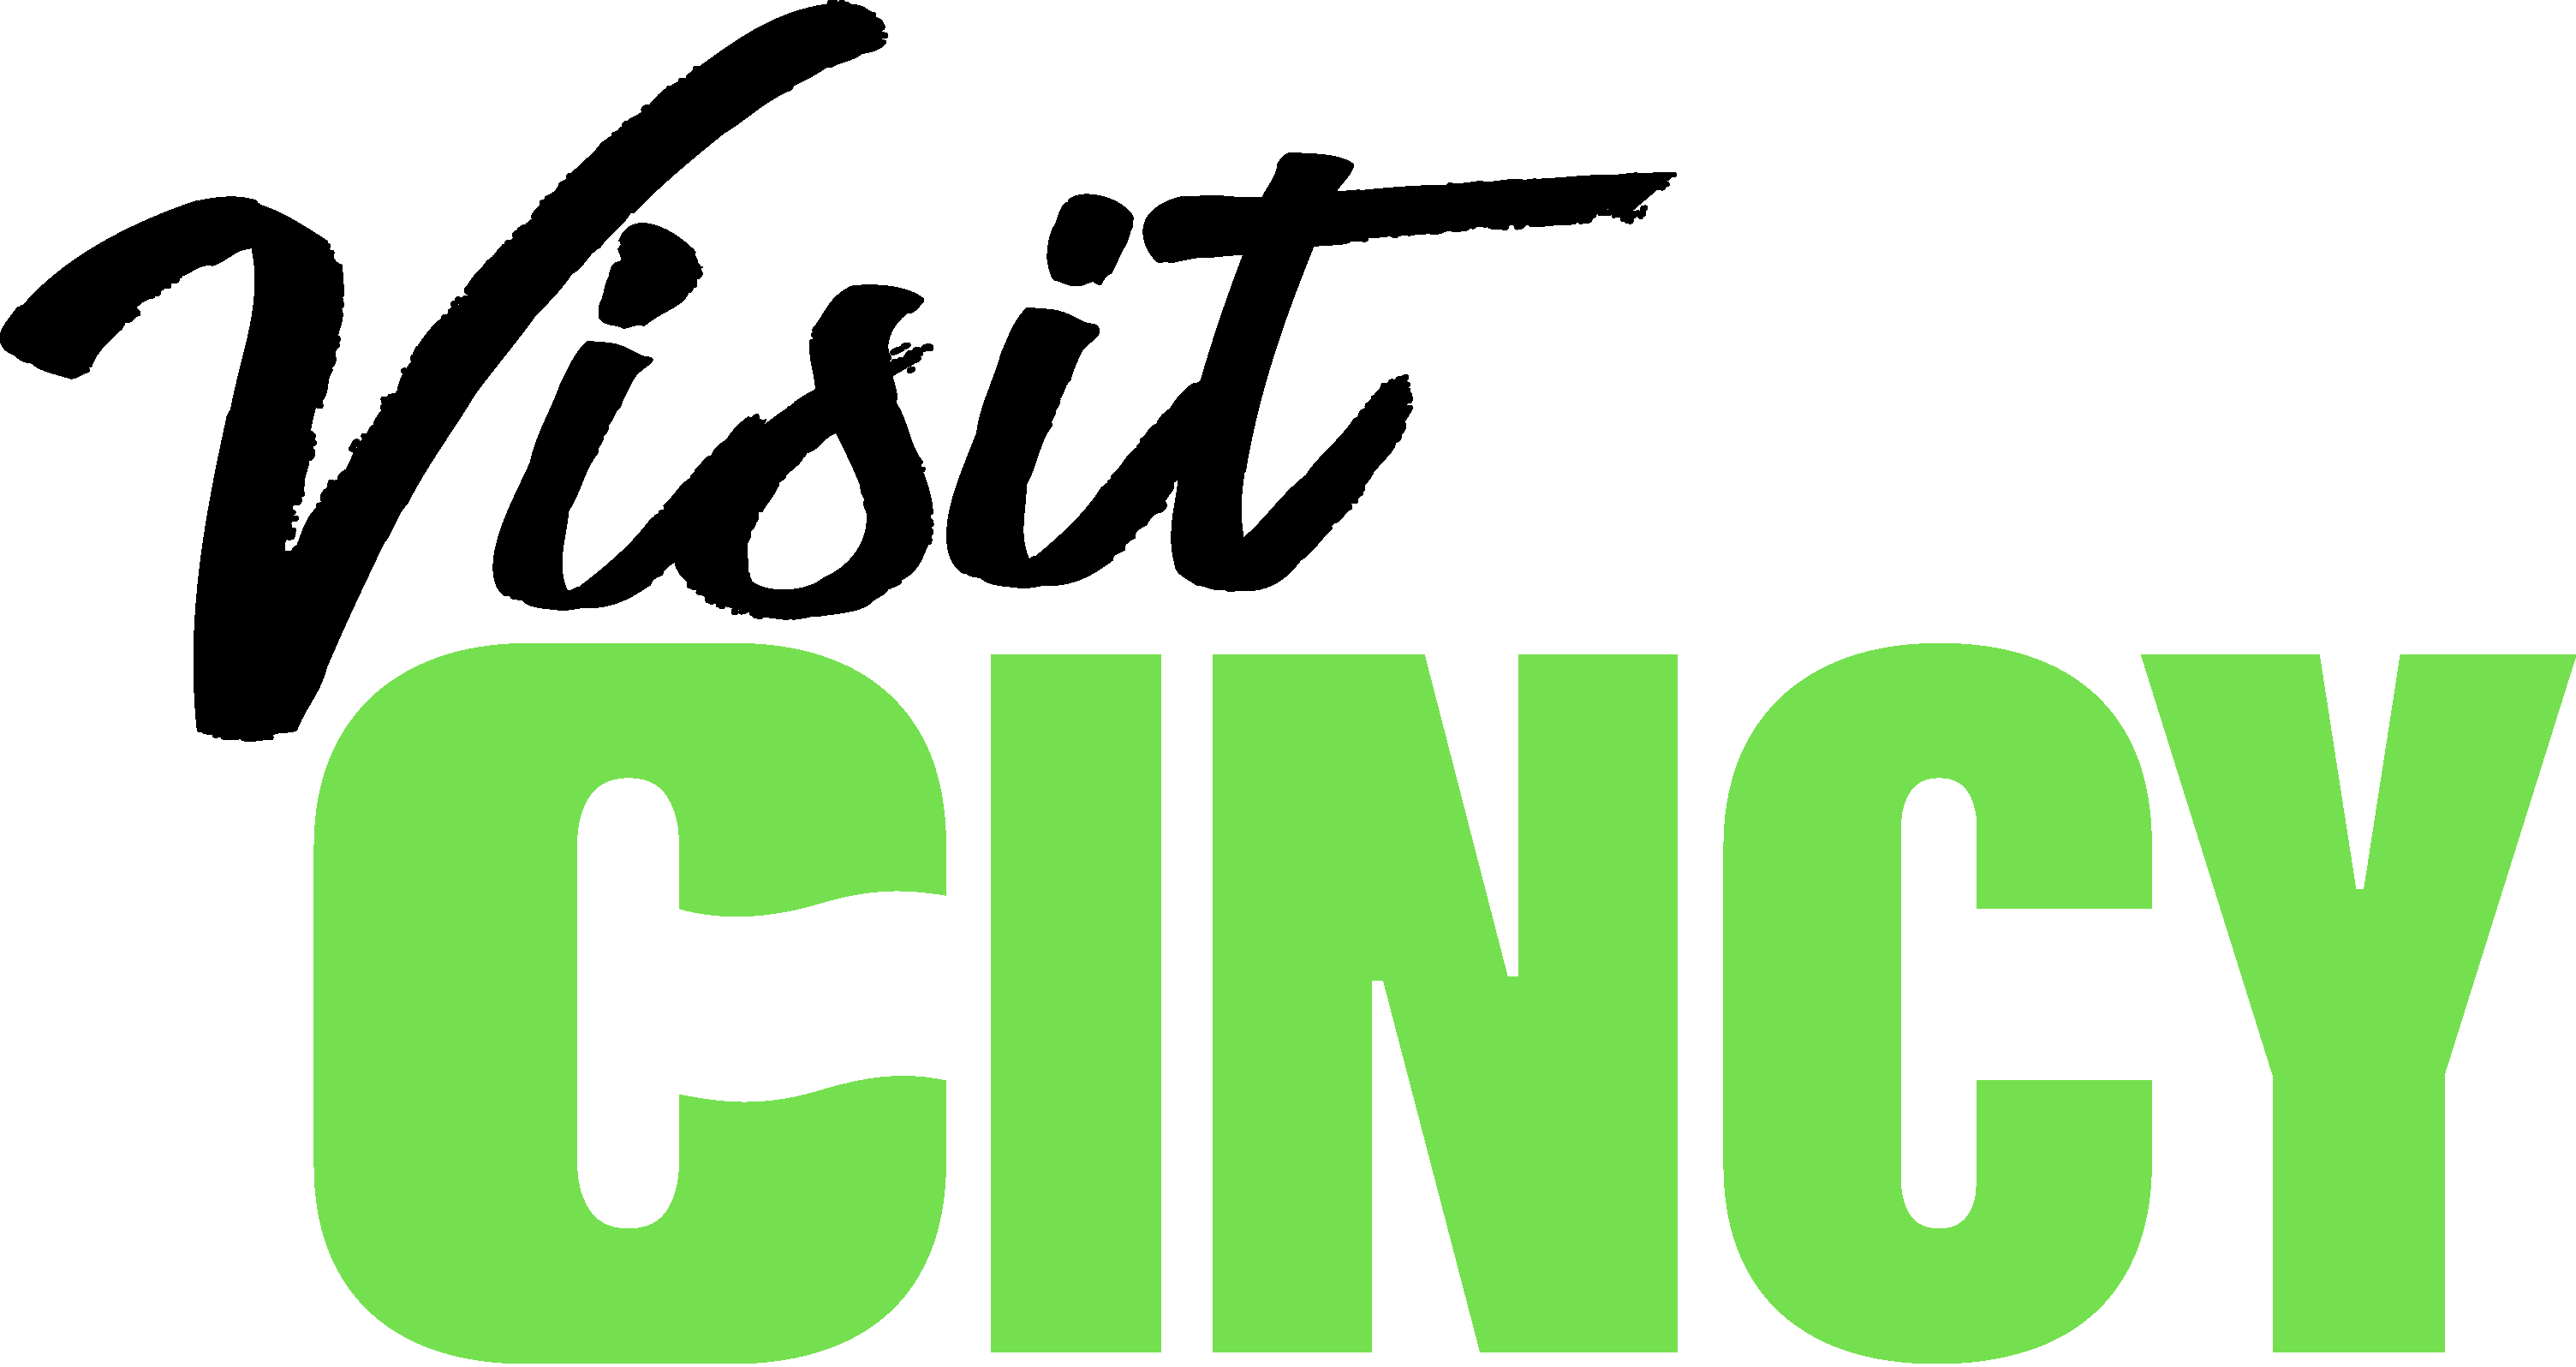 Cincinnati Travel "Visit Cincy" logo